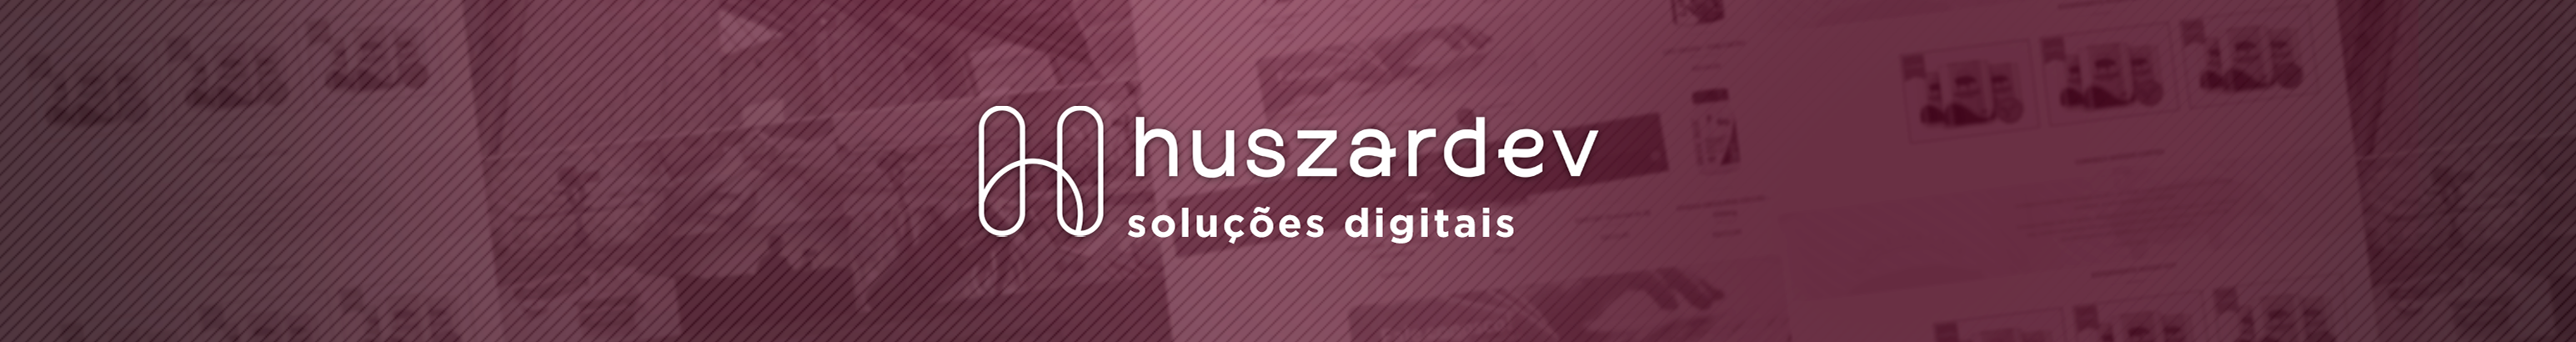 Felipe Huszar's profile banner